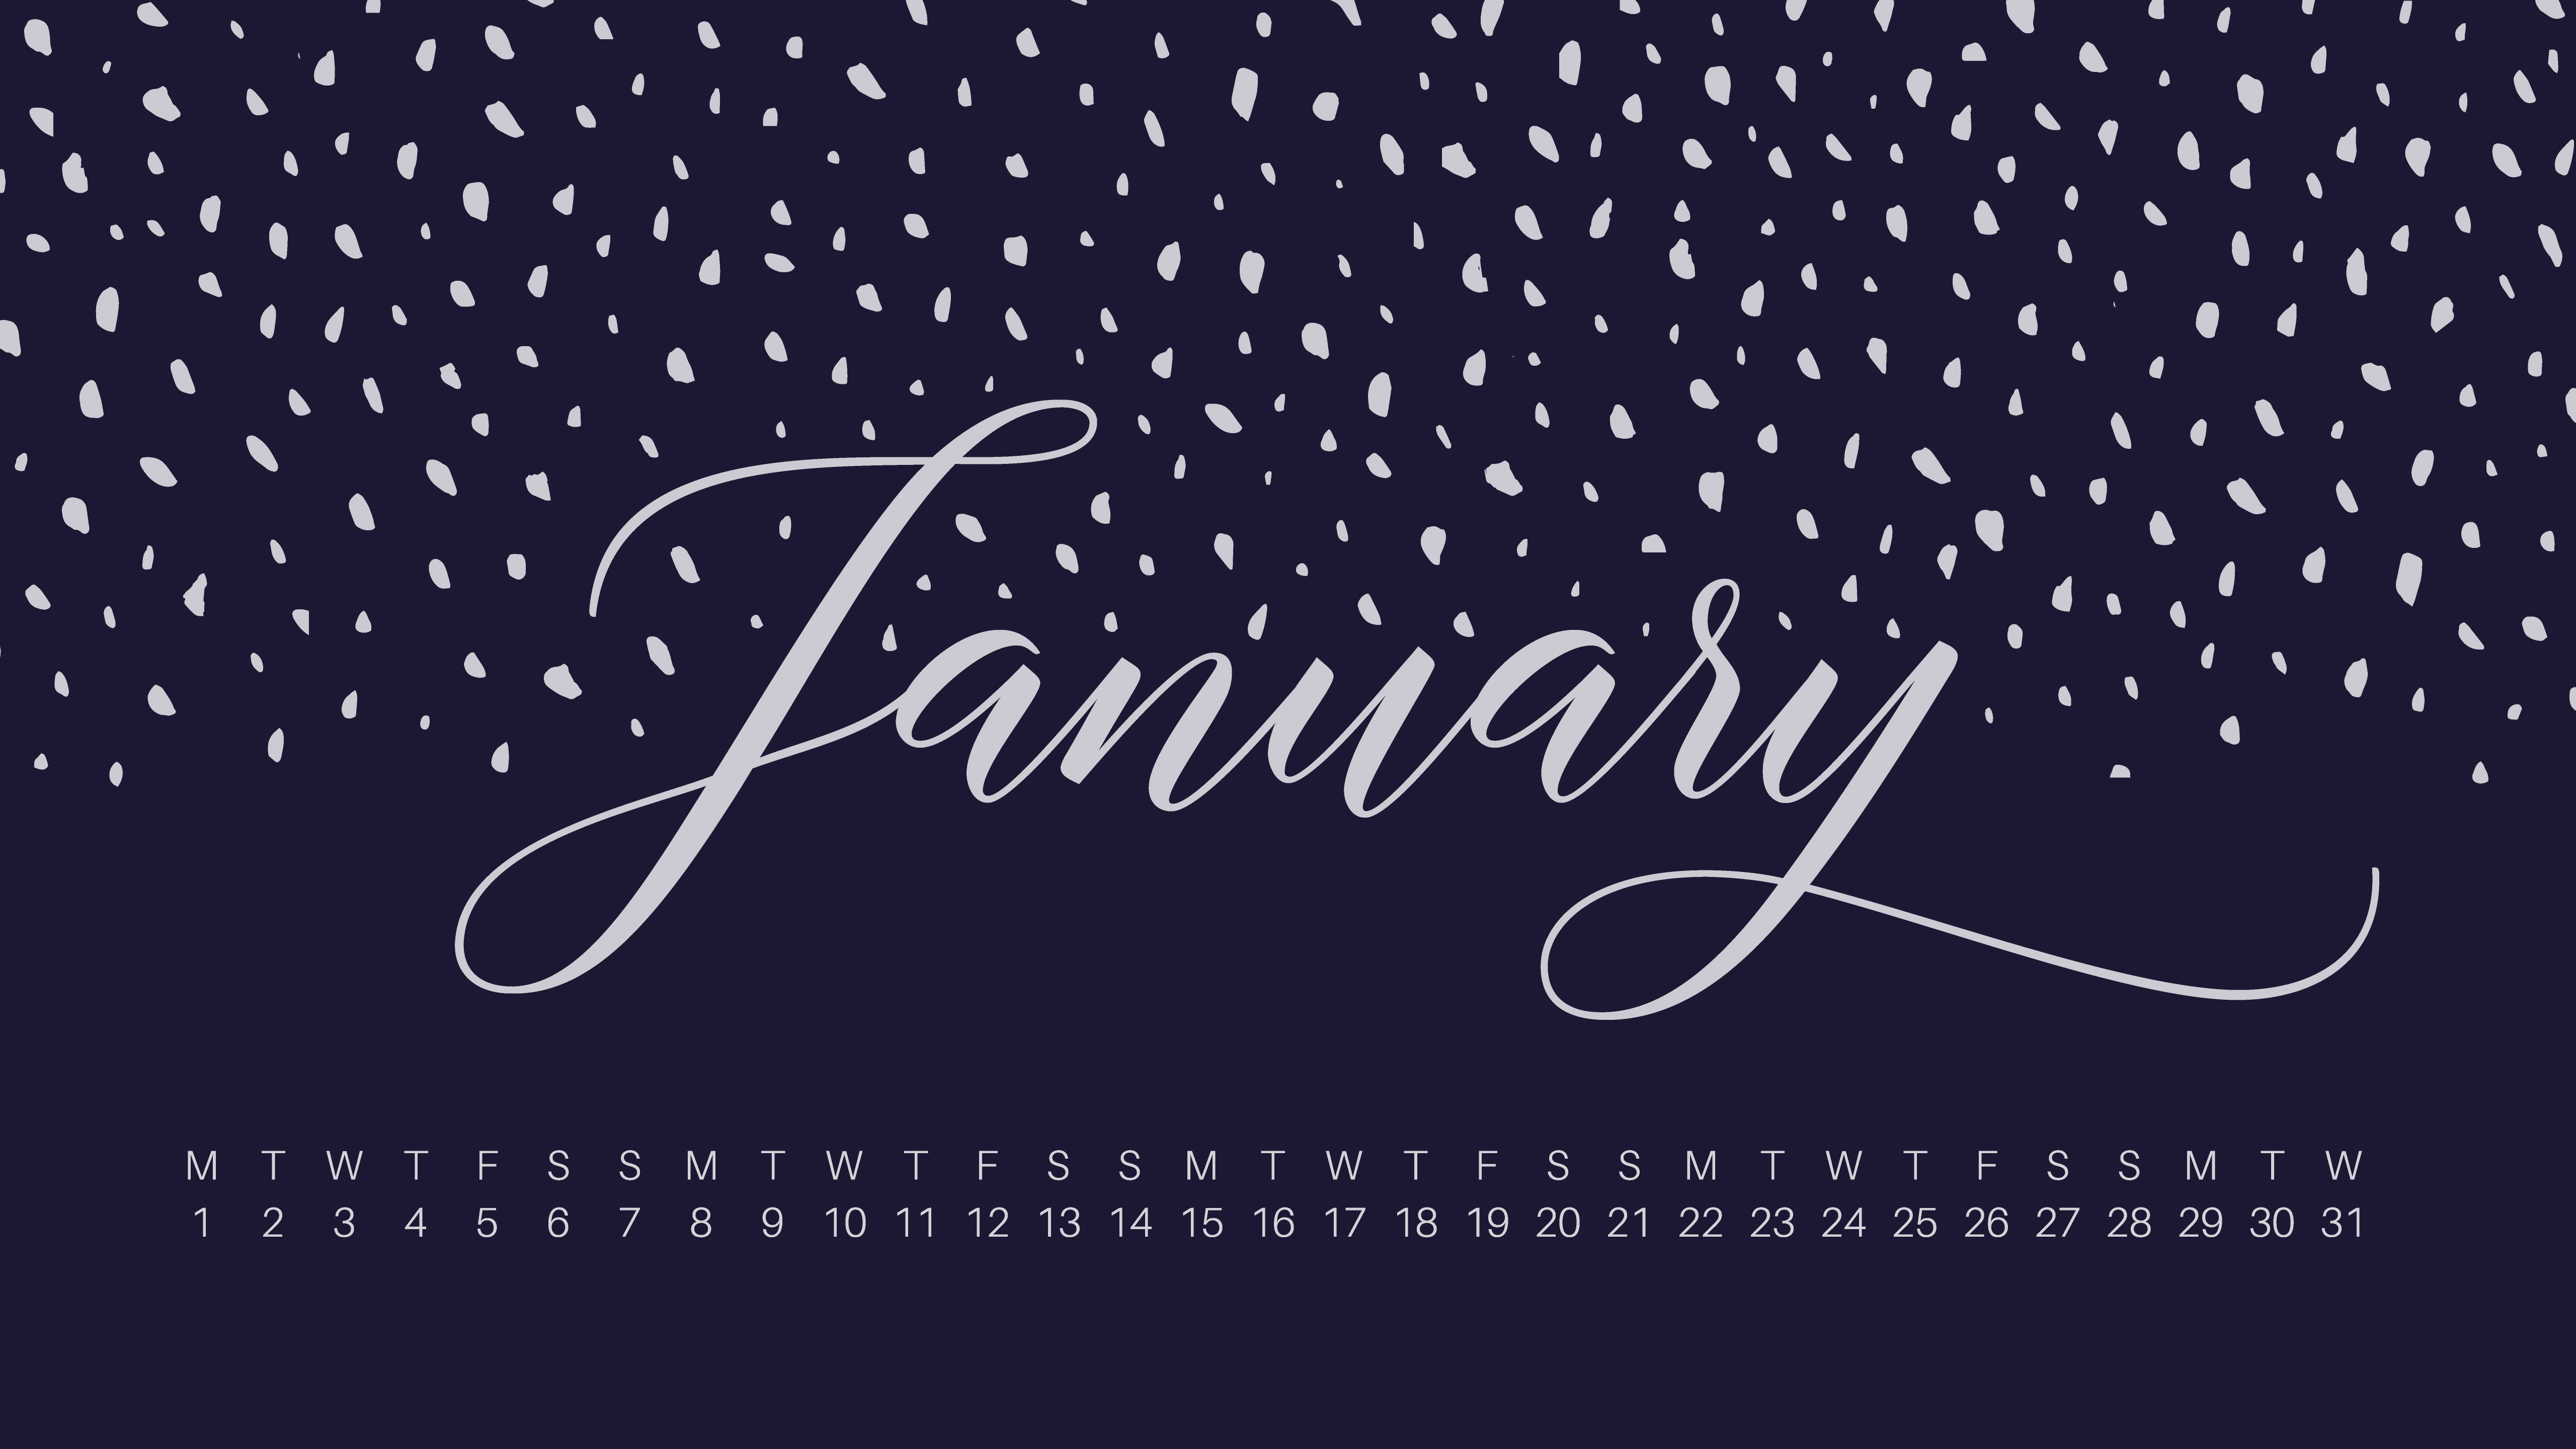 January Calendar Wallpaper 2018 - HD Wallpaper 